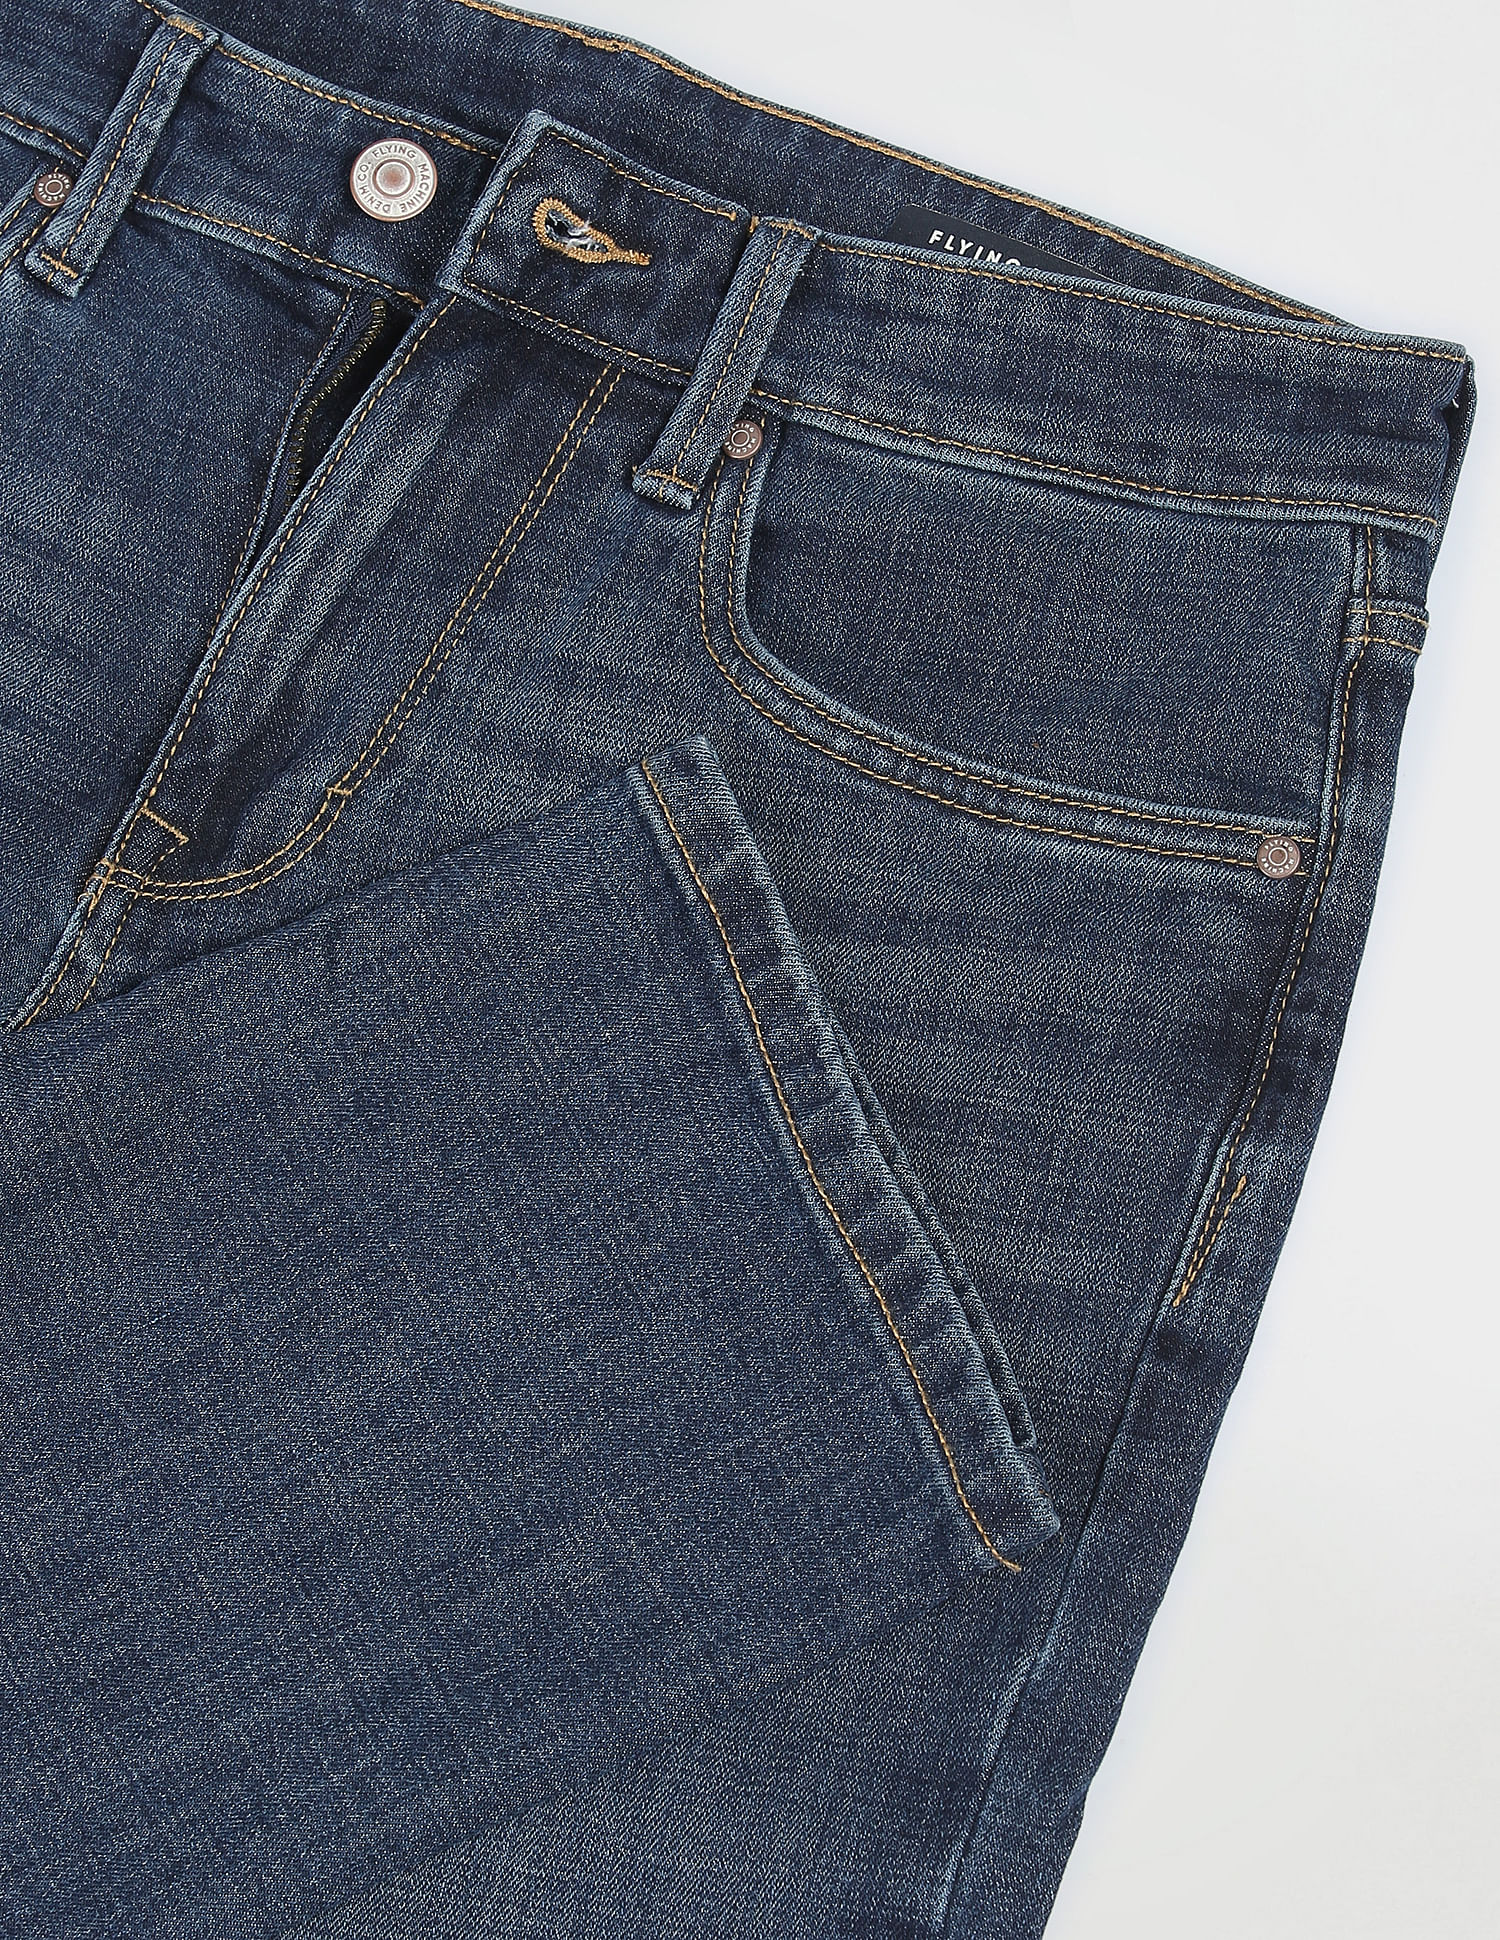 Sewing Denim Jeans with Sewing Machine. Repair Jeans by Sewing Machine  Stock Image - Image of fabric, foot: 136581333